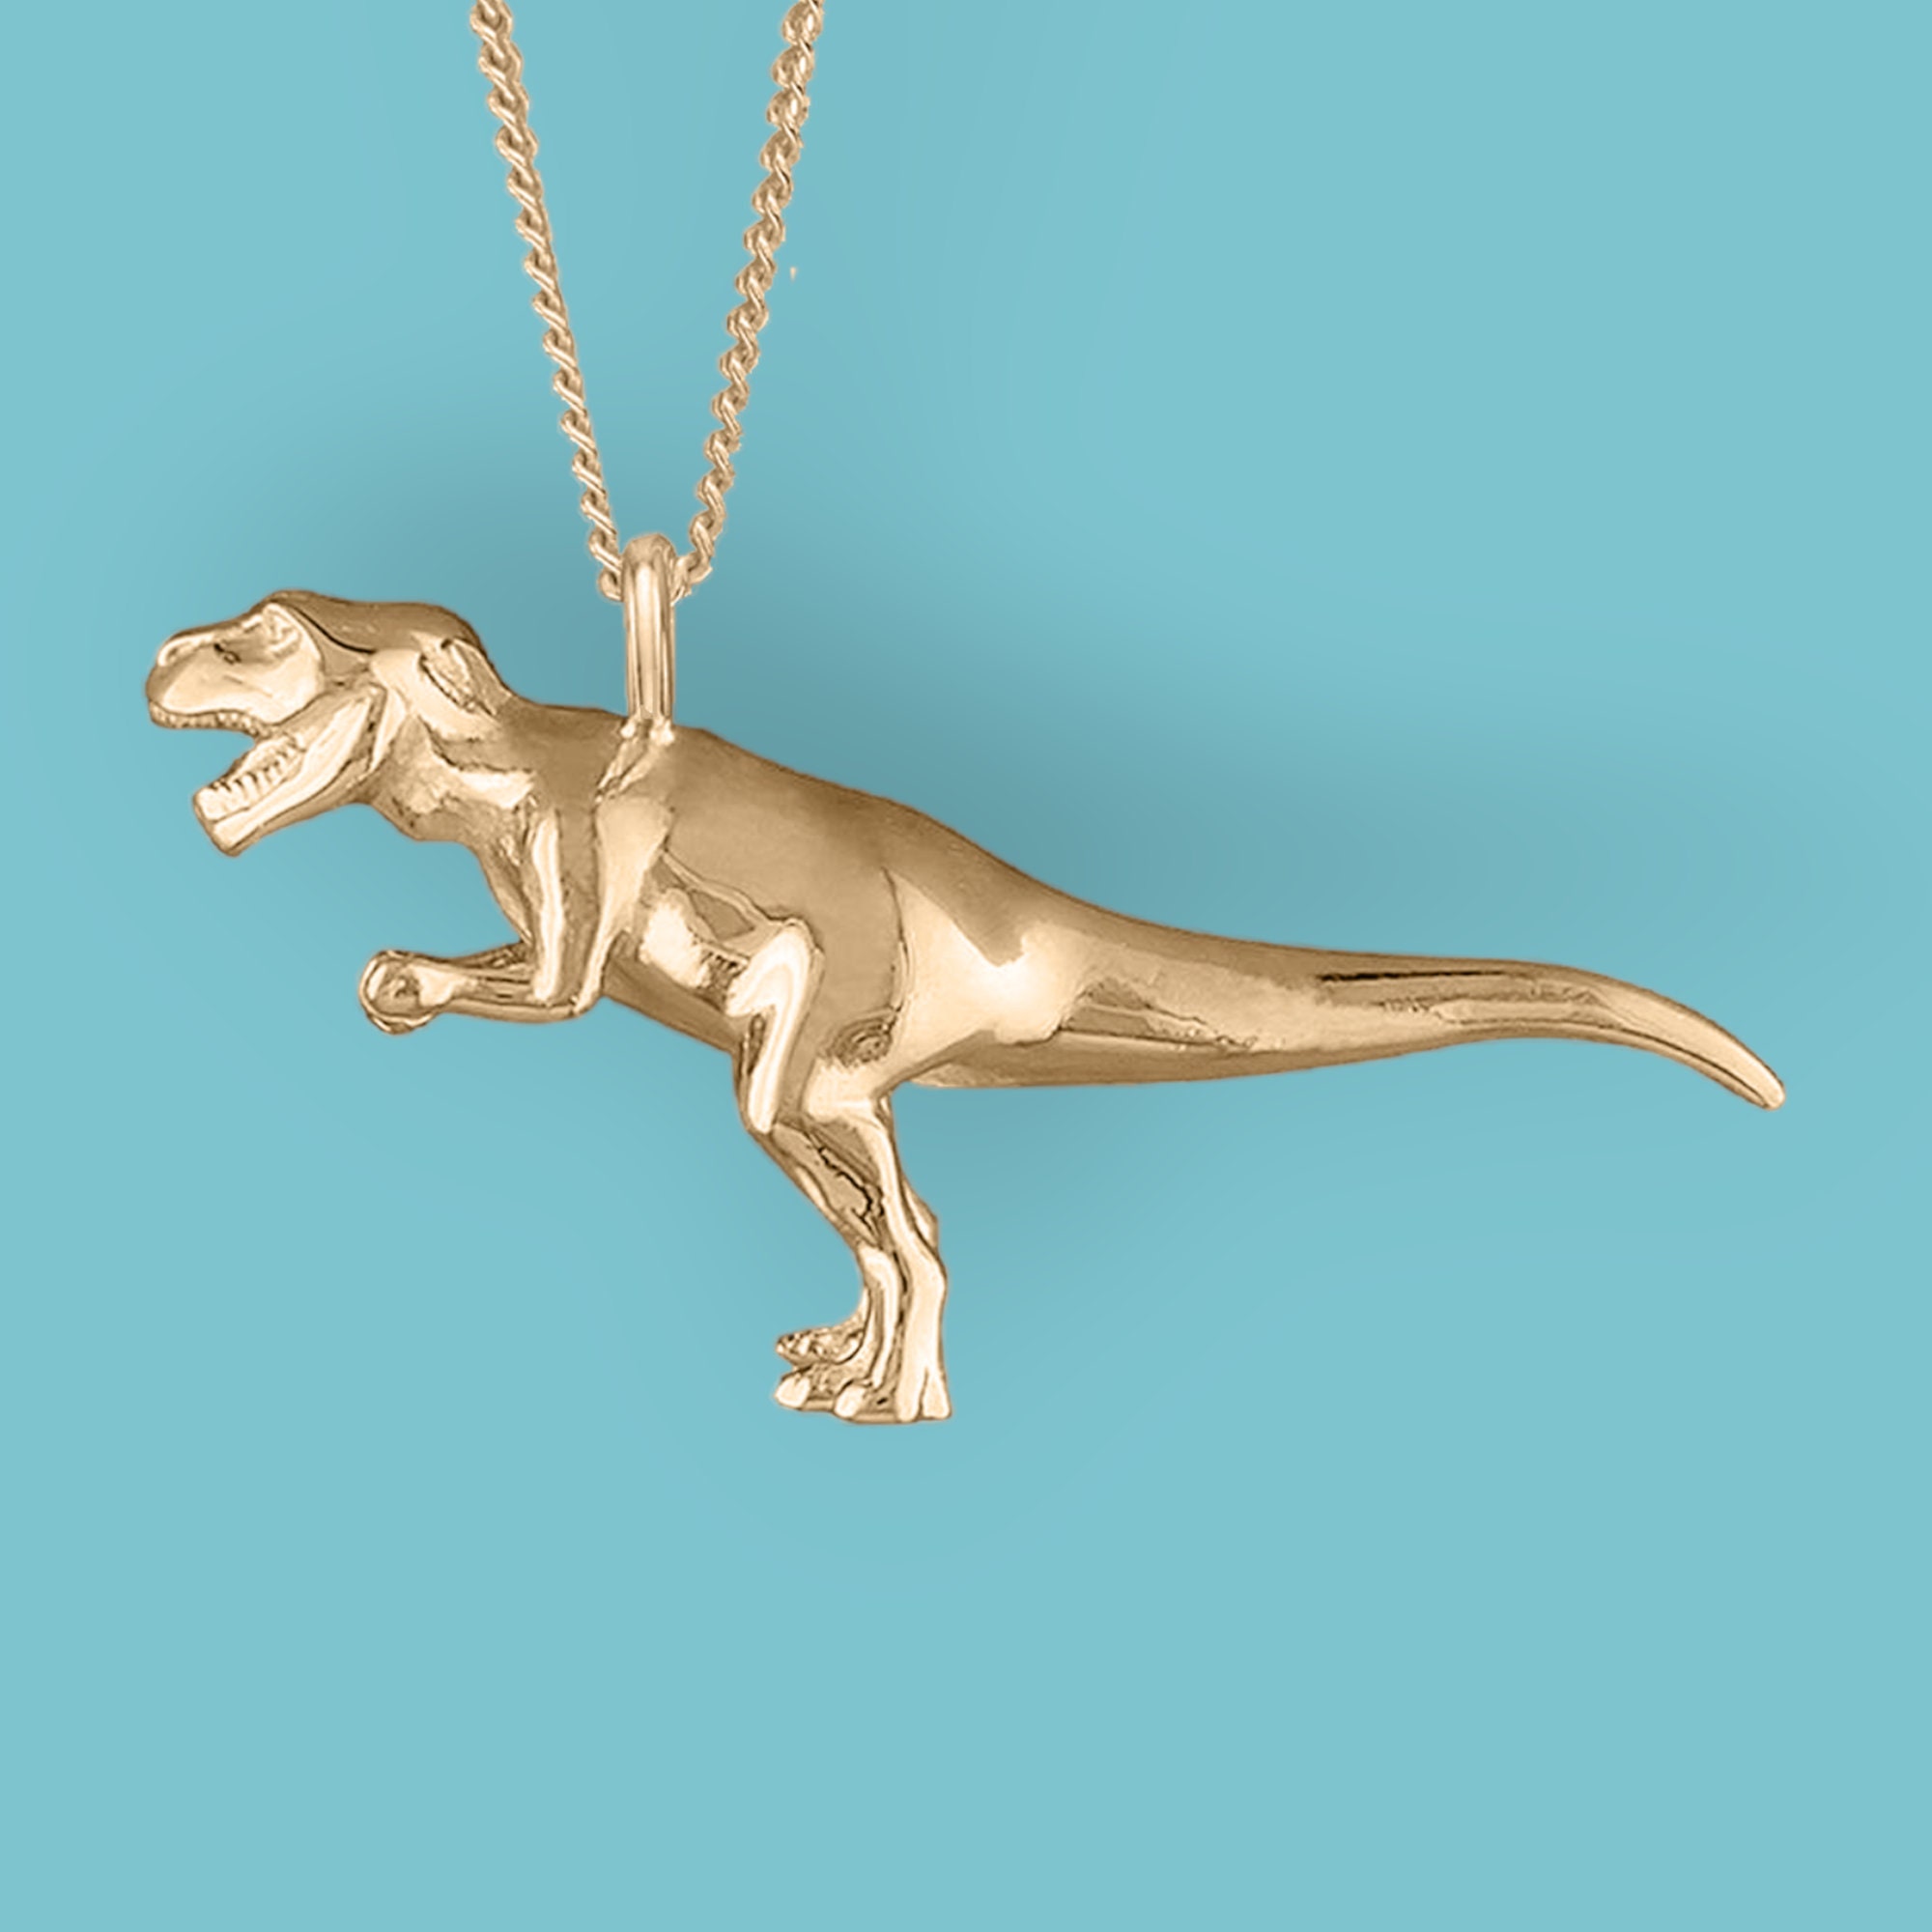 Dinosaur necklace gold tiny stegosaurus necklace dinosaur charm